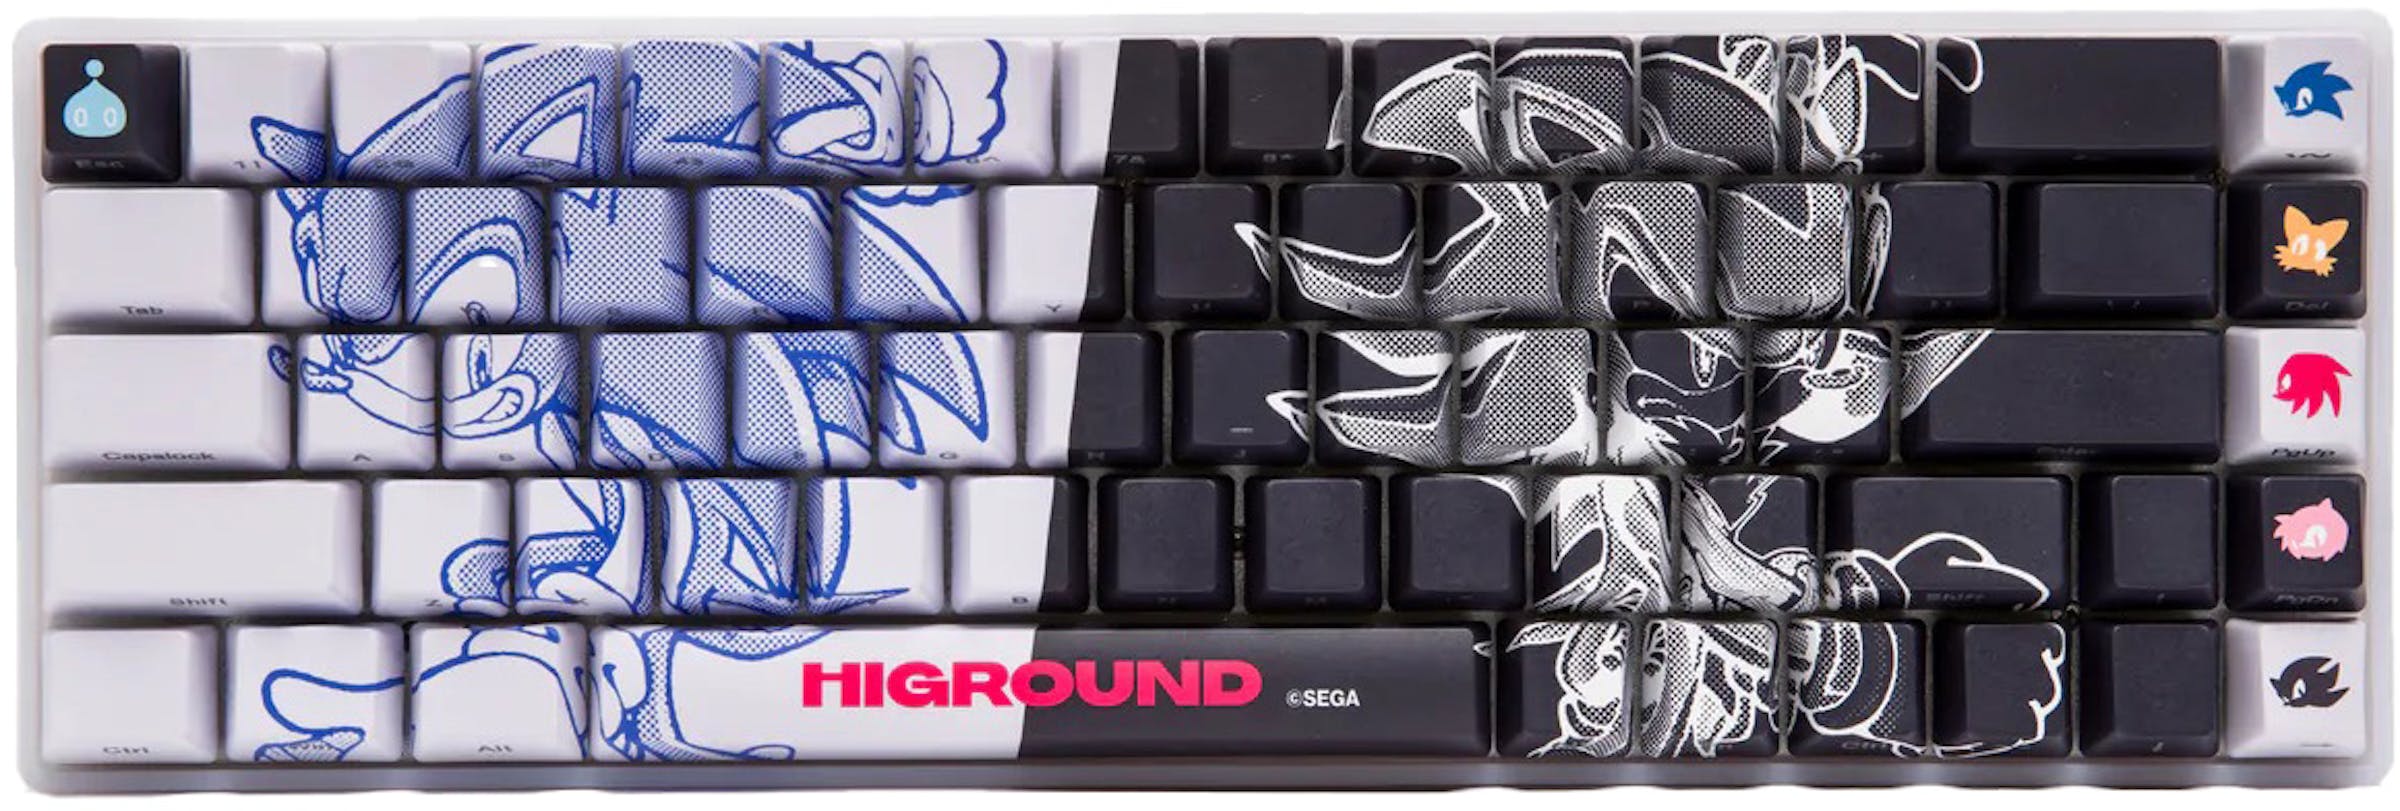 Higround x Sonic the Hedgehog Adventure Keyboard Gray/Black - US